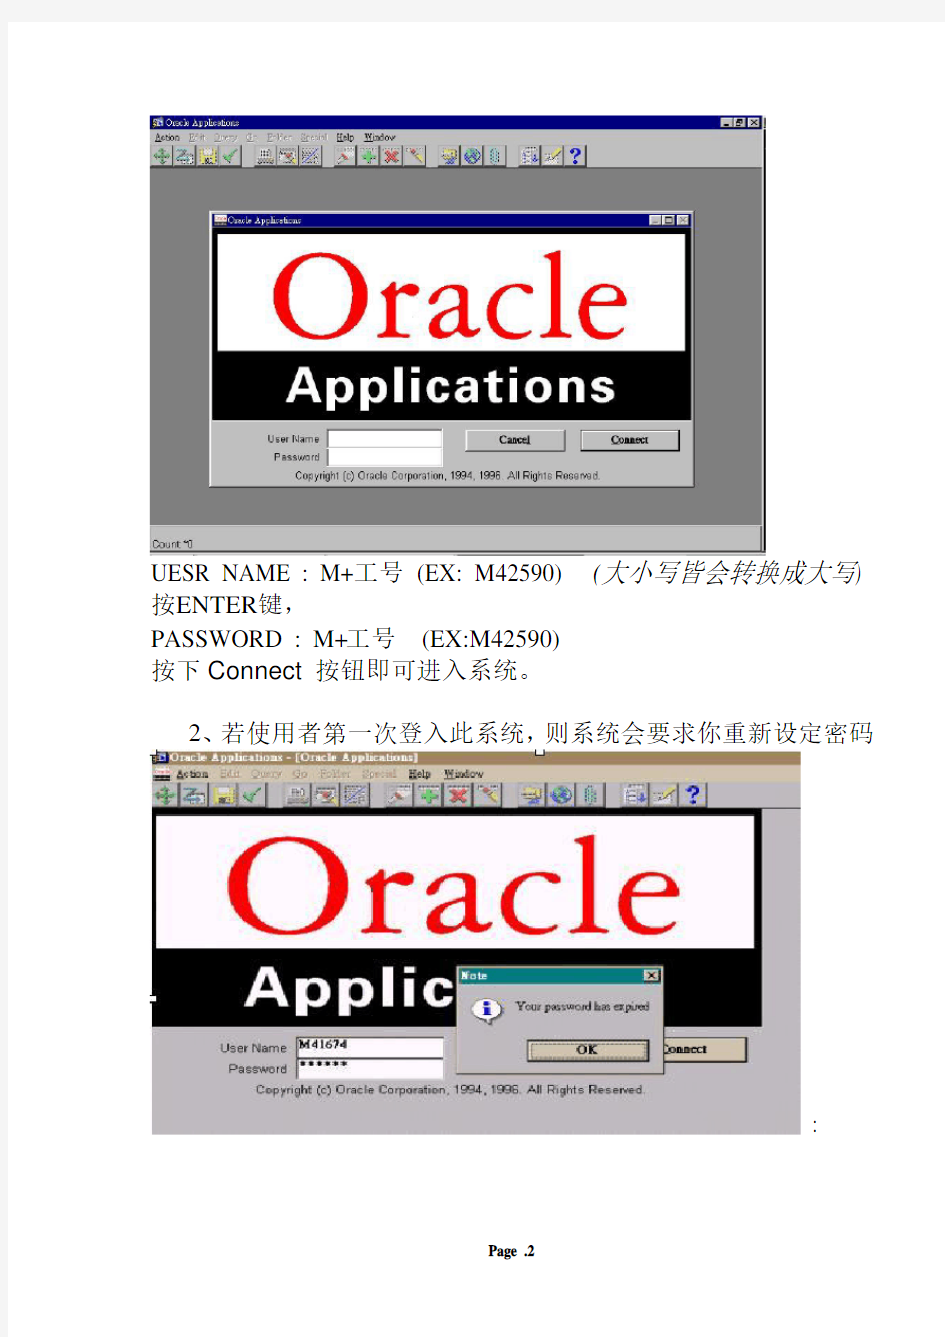 Oracle数据库使用手册